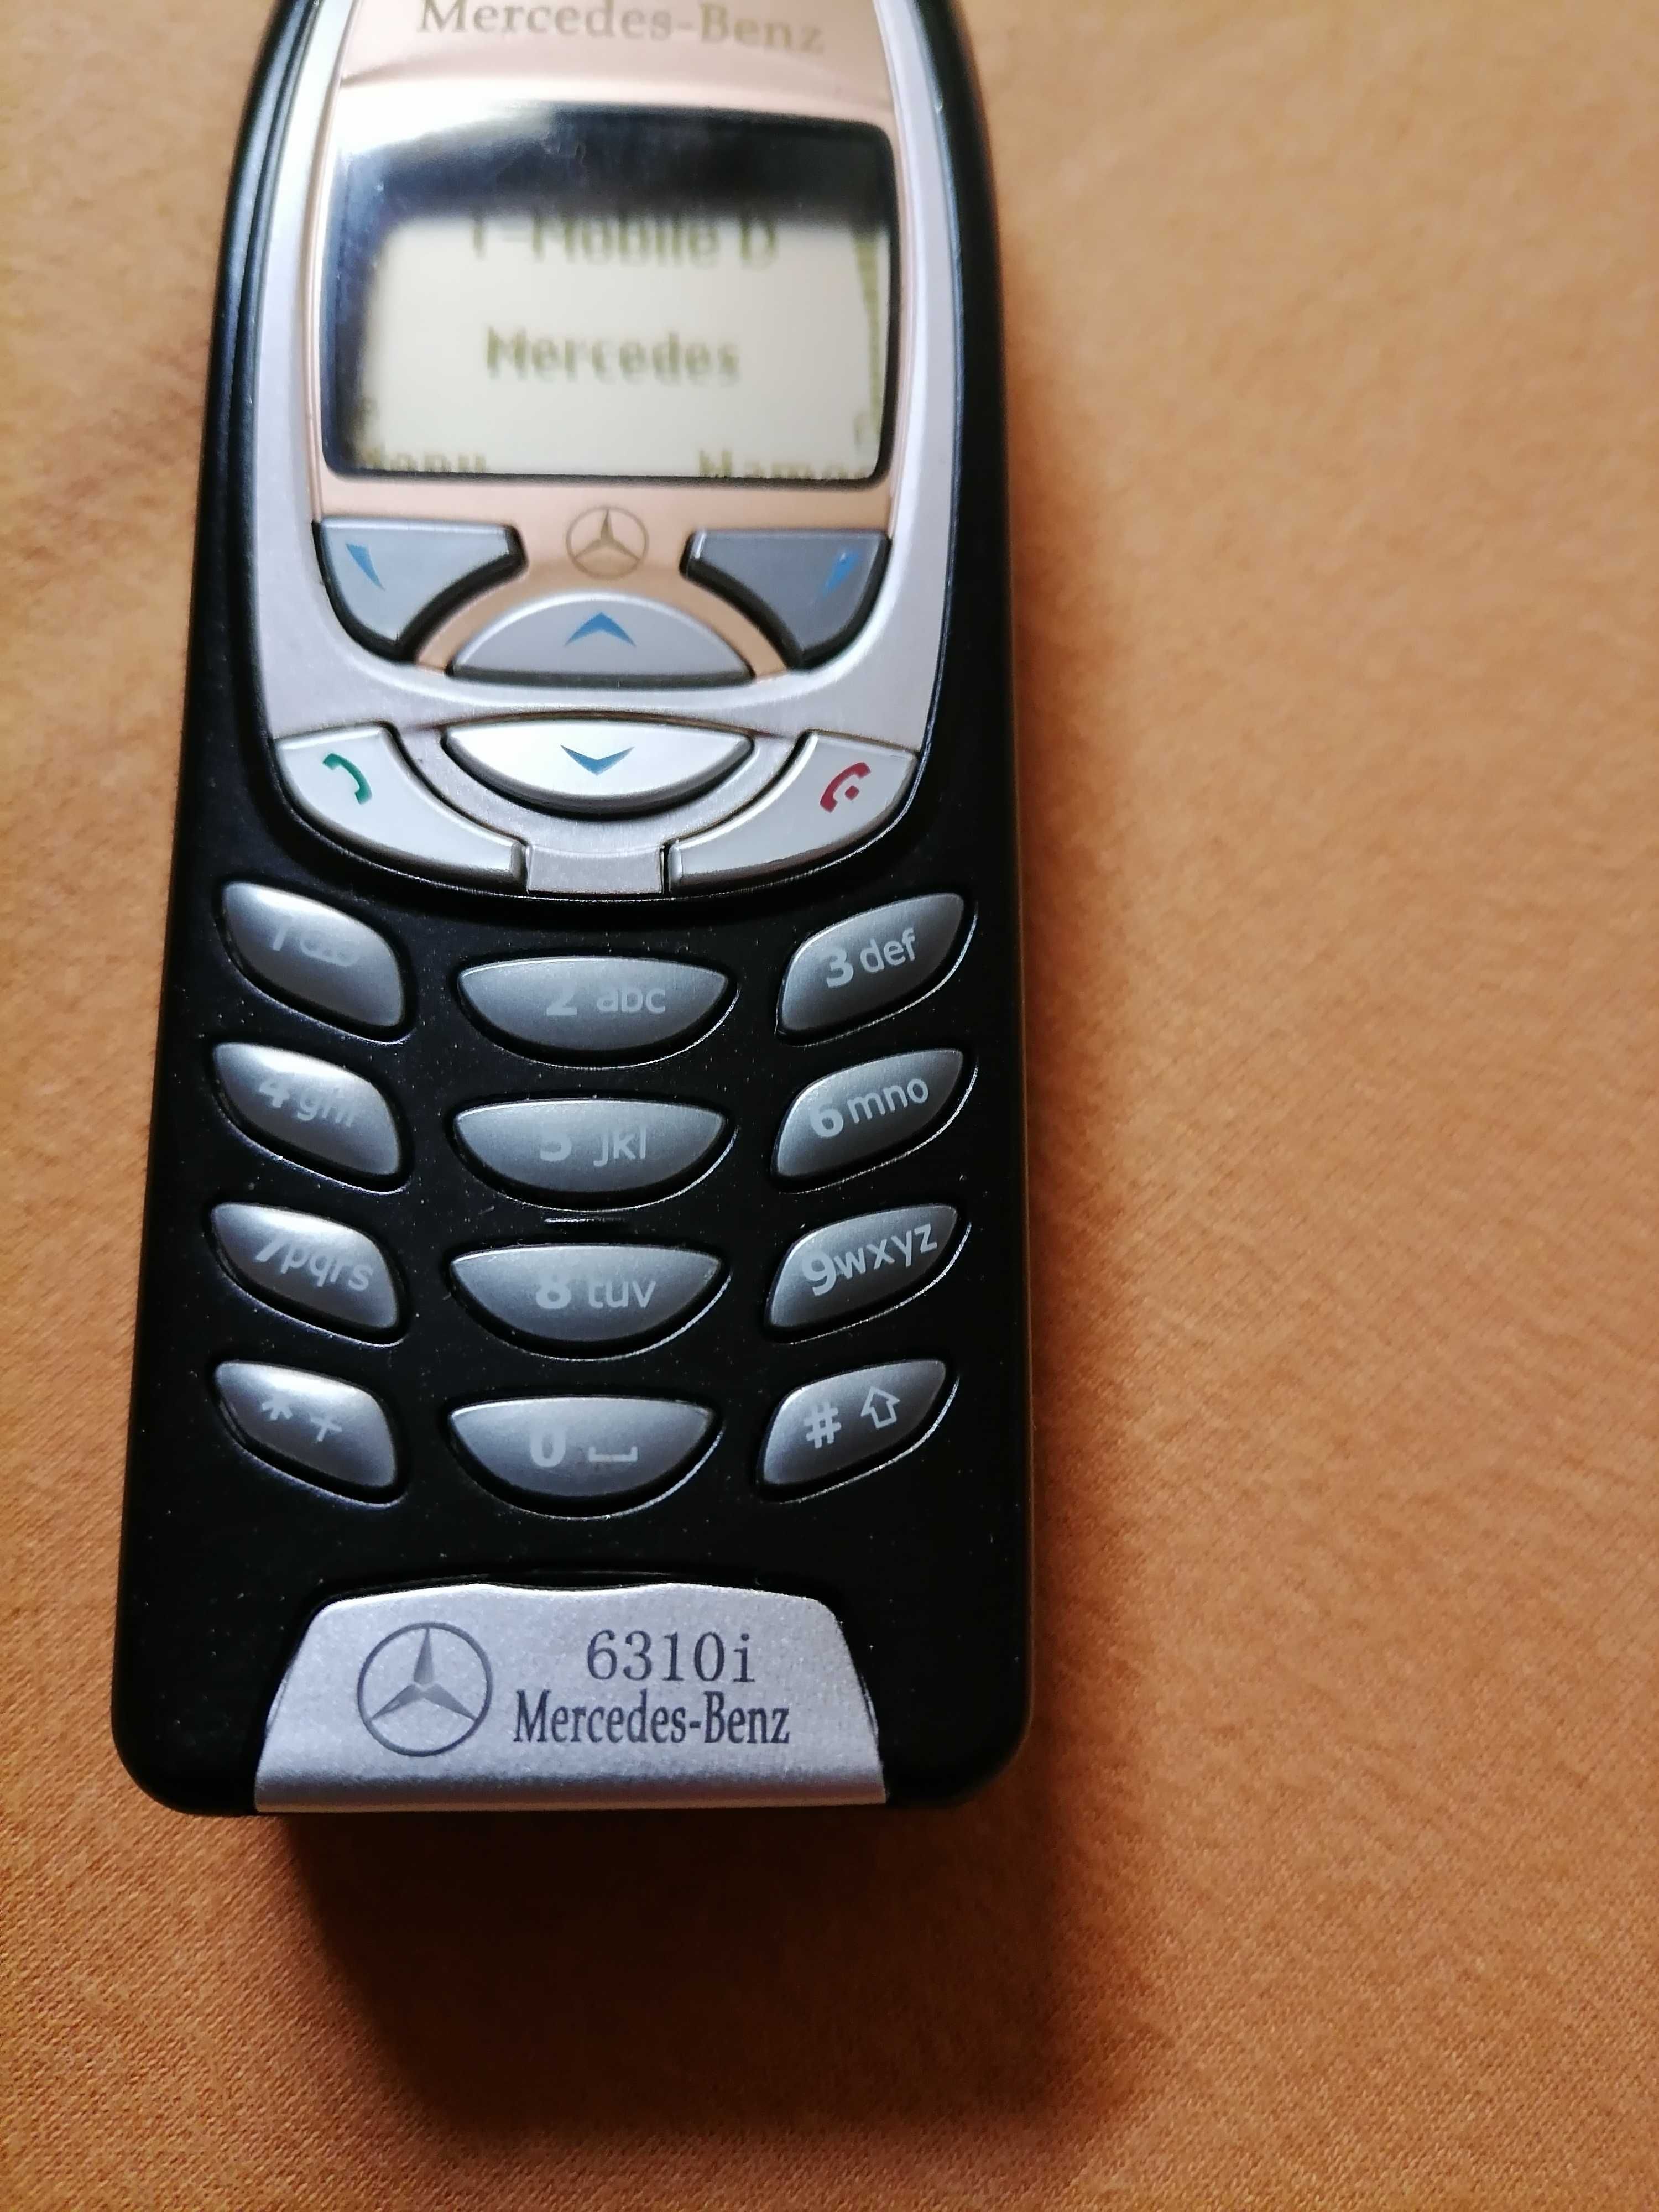 De vânzare Nokia 6310i